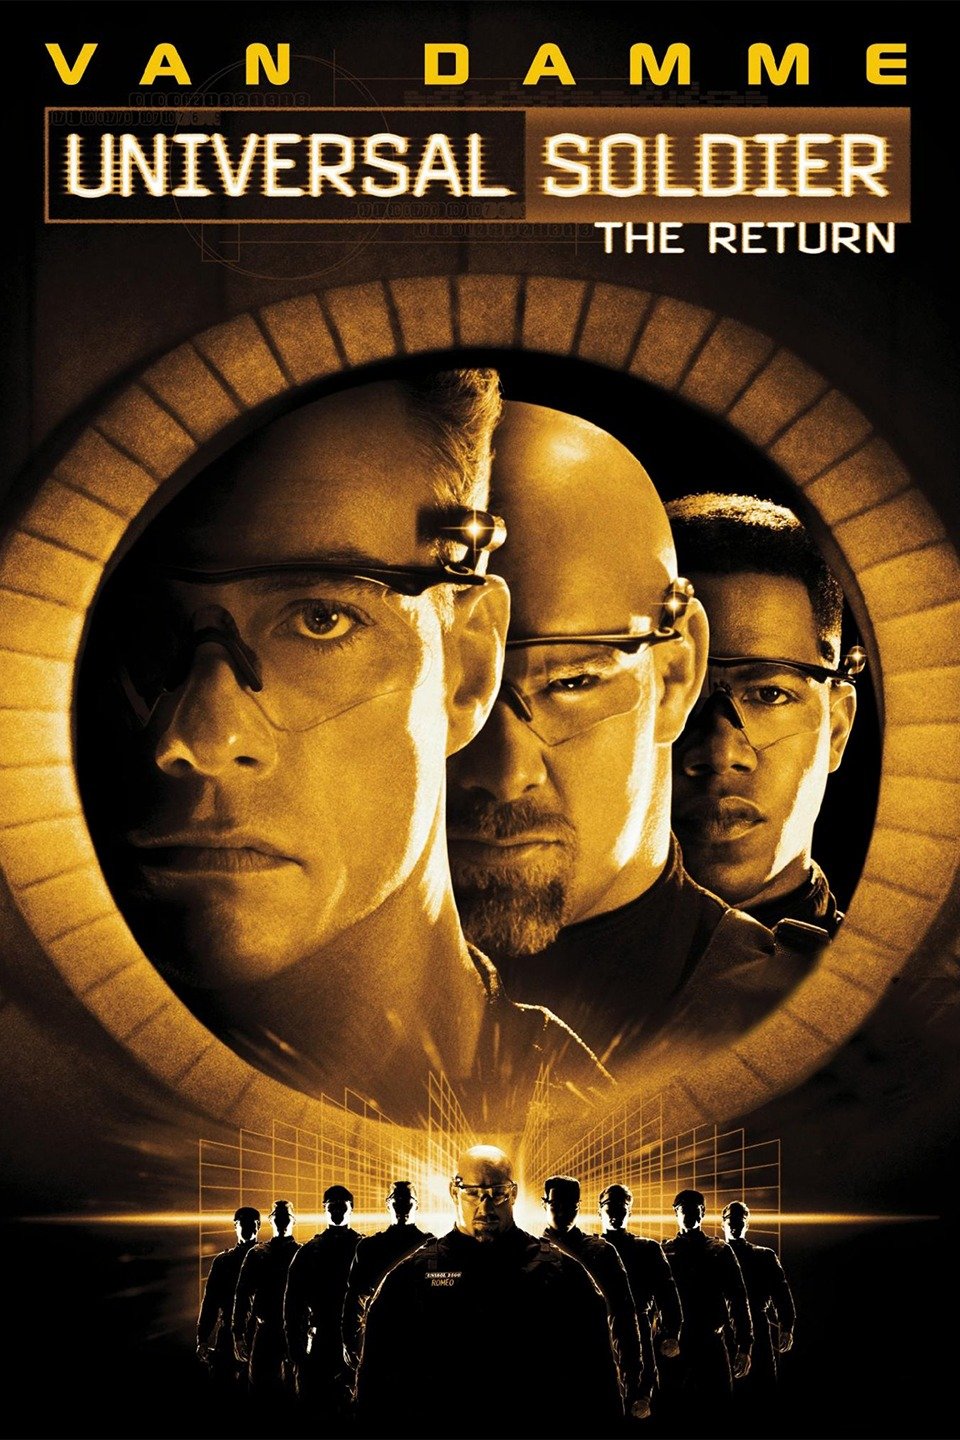 [FULL-HD LHQ] Universal Soldier: The Return (1999) 2 คนไม่ใช่คน นักรบกระดูกสมองกล ภาค 2 [1080p] [พากย์ไทย 5.1 + เสียงอังกฤษ DTS] [บรรยายไทย + อังกฤษ] [เสียงไทย + ซับไทย] [OPENLOAD]